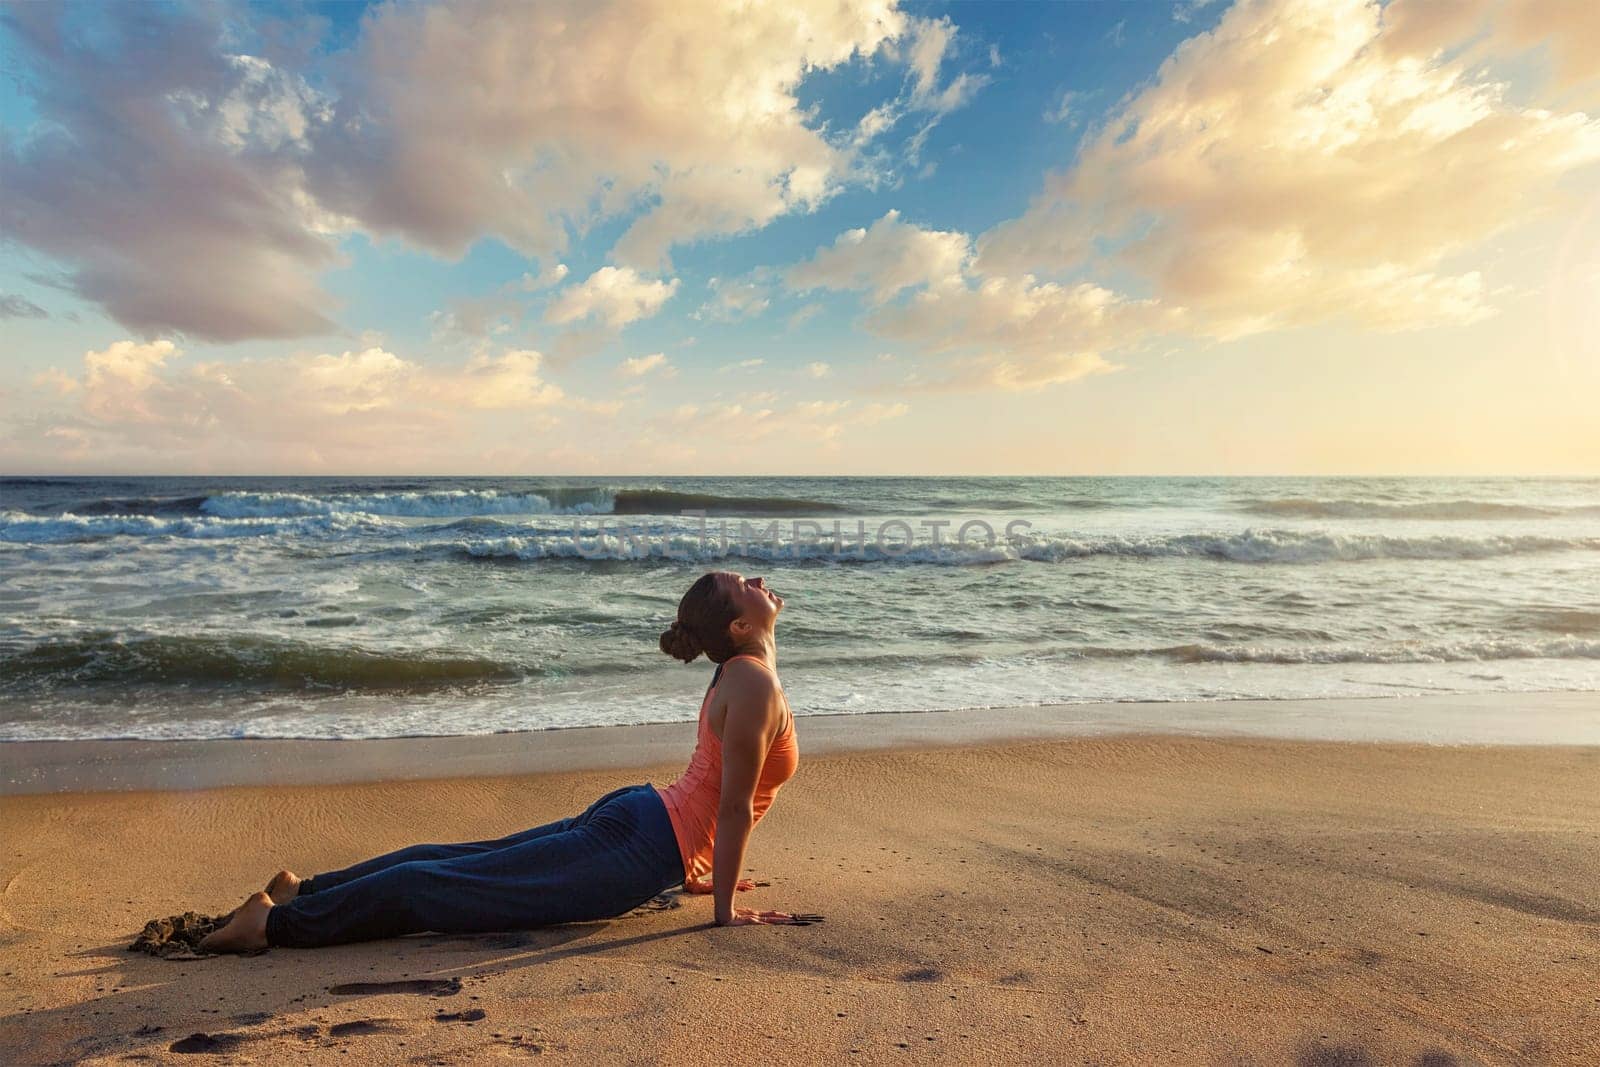 Woman practices yoga asana Urdhva Mukha Svanasana at the beach by dimol